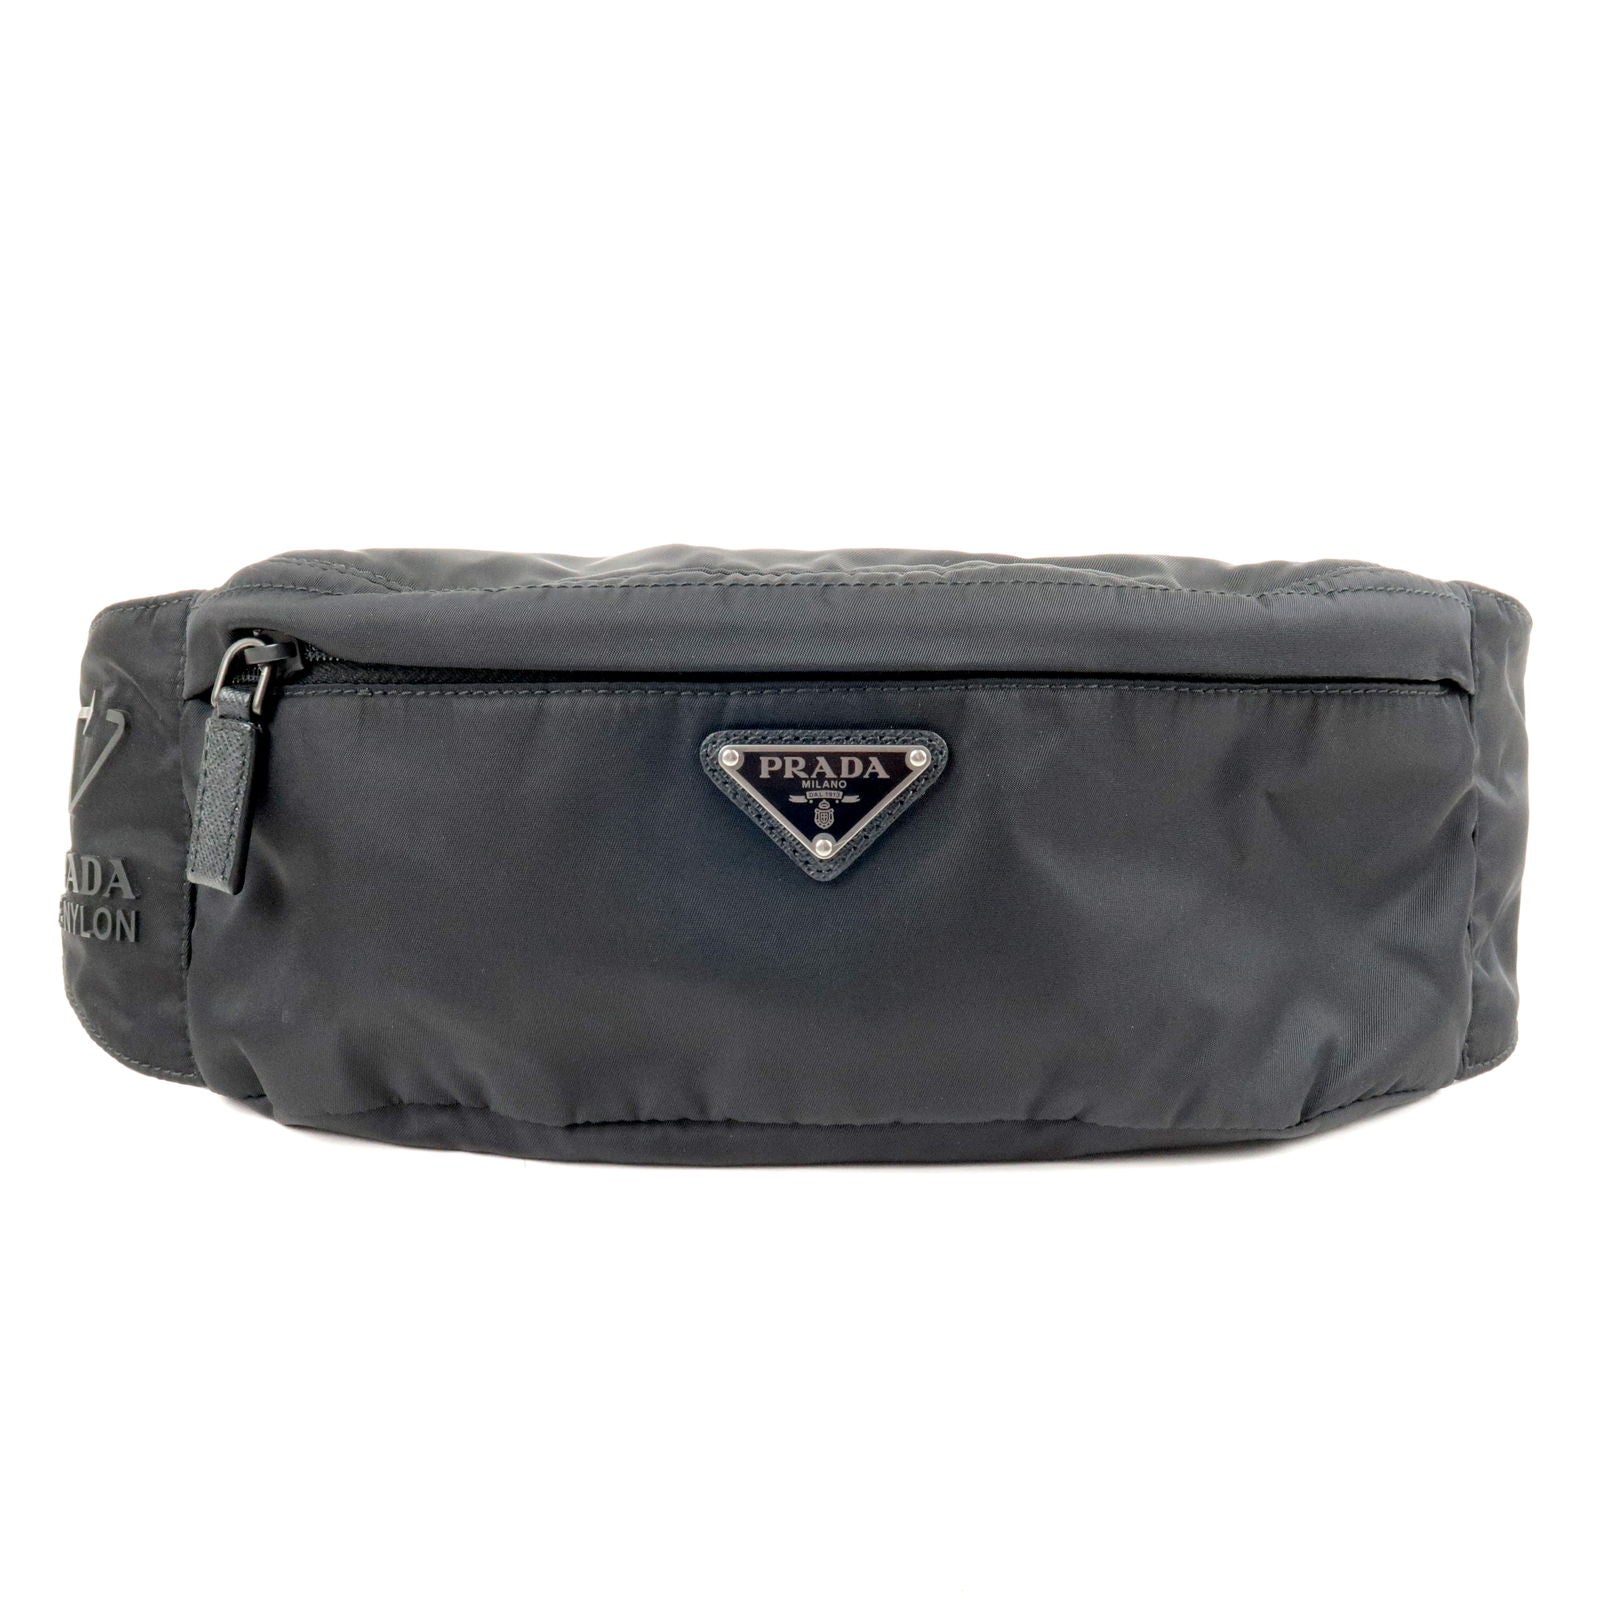 PRADA-Logo-Re-Nylon-Leather-Waist-Bag-Body-Bag-NERO-Black